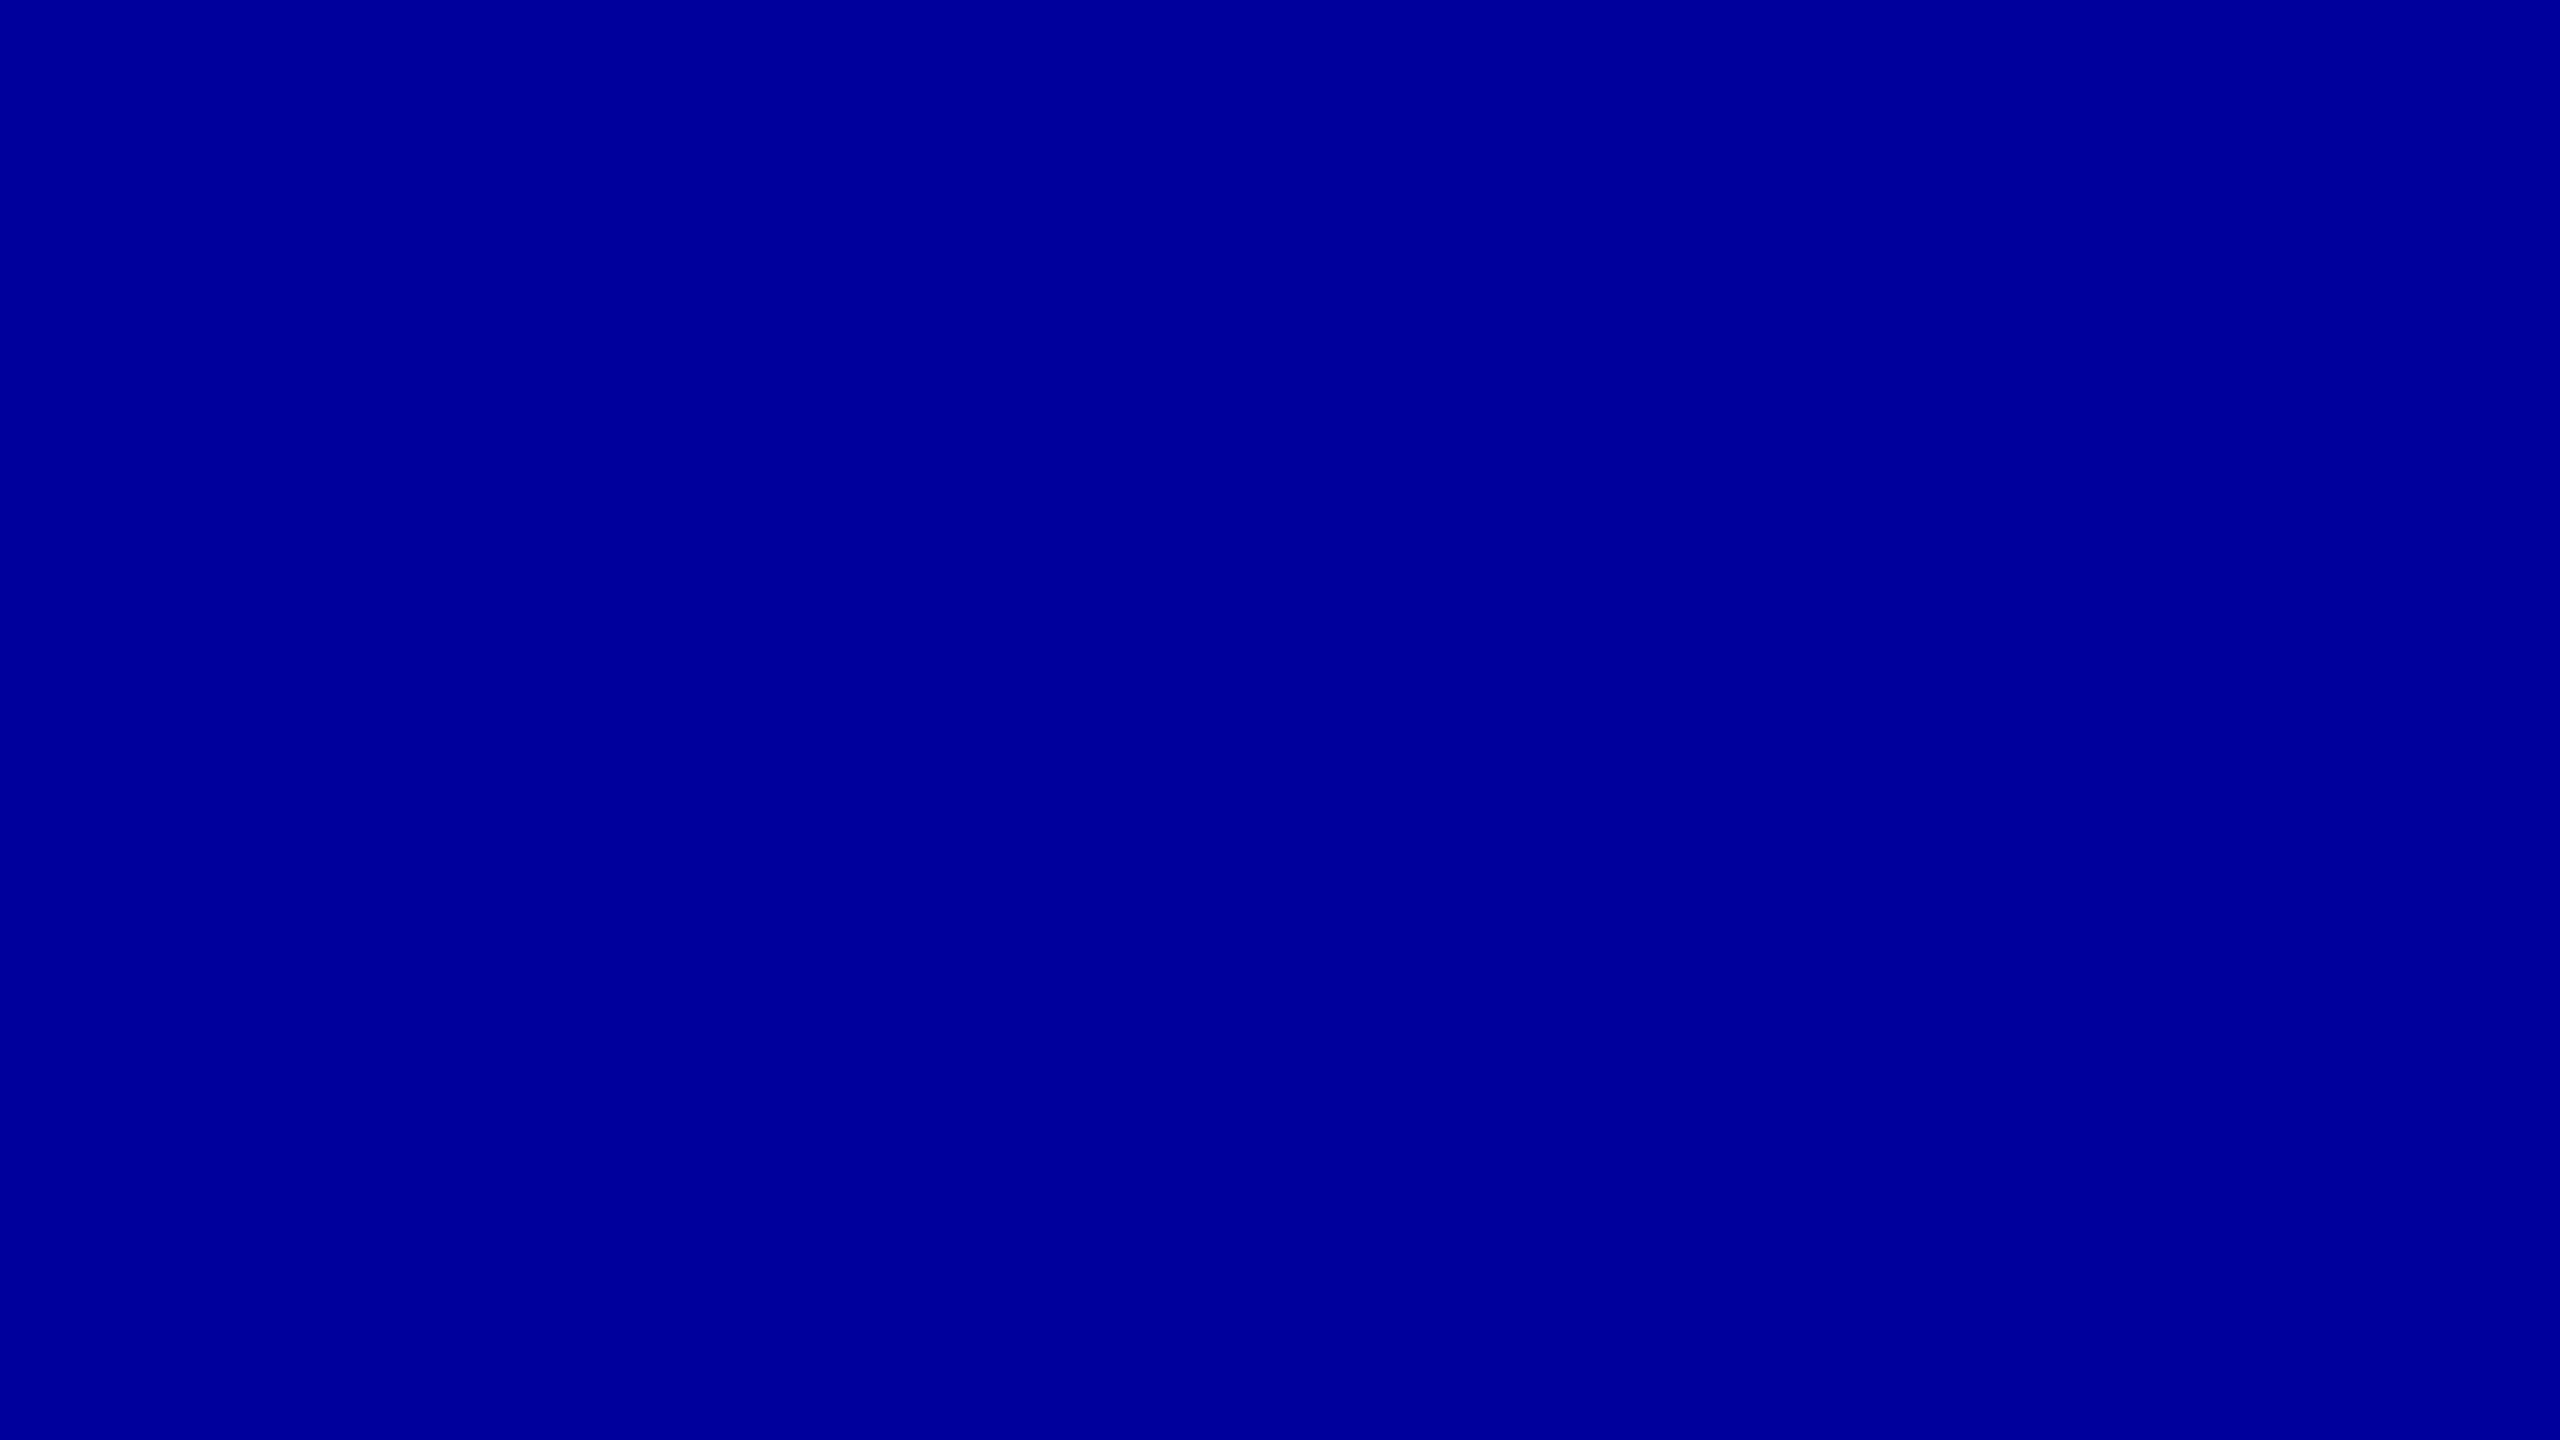 2560x1440 Duke Blue Solid Color Background